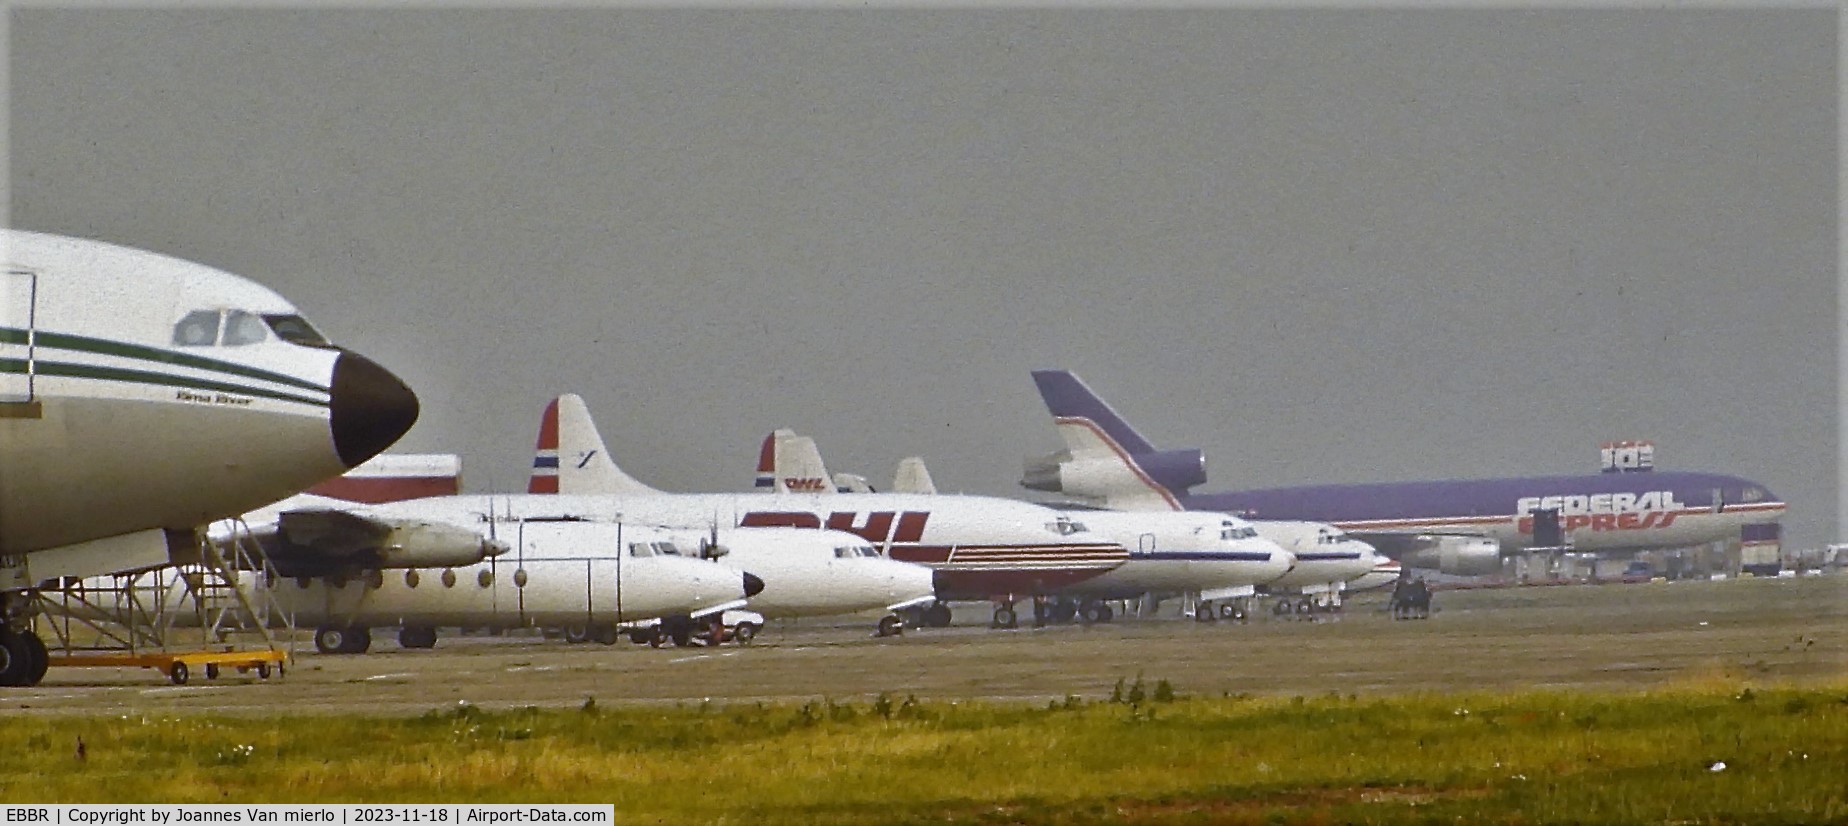 Brussels Airport, Brussels / Zaventem   Belgium (EBBR) - Brussels FEDEX hub '90s ex-slide